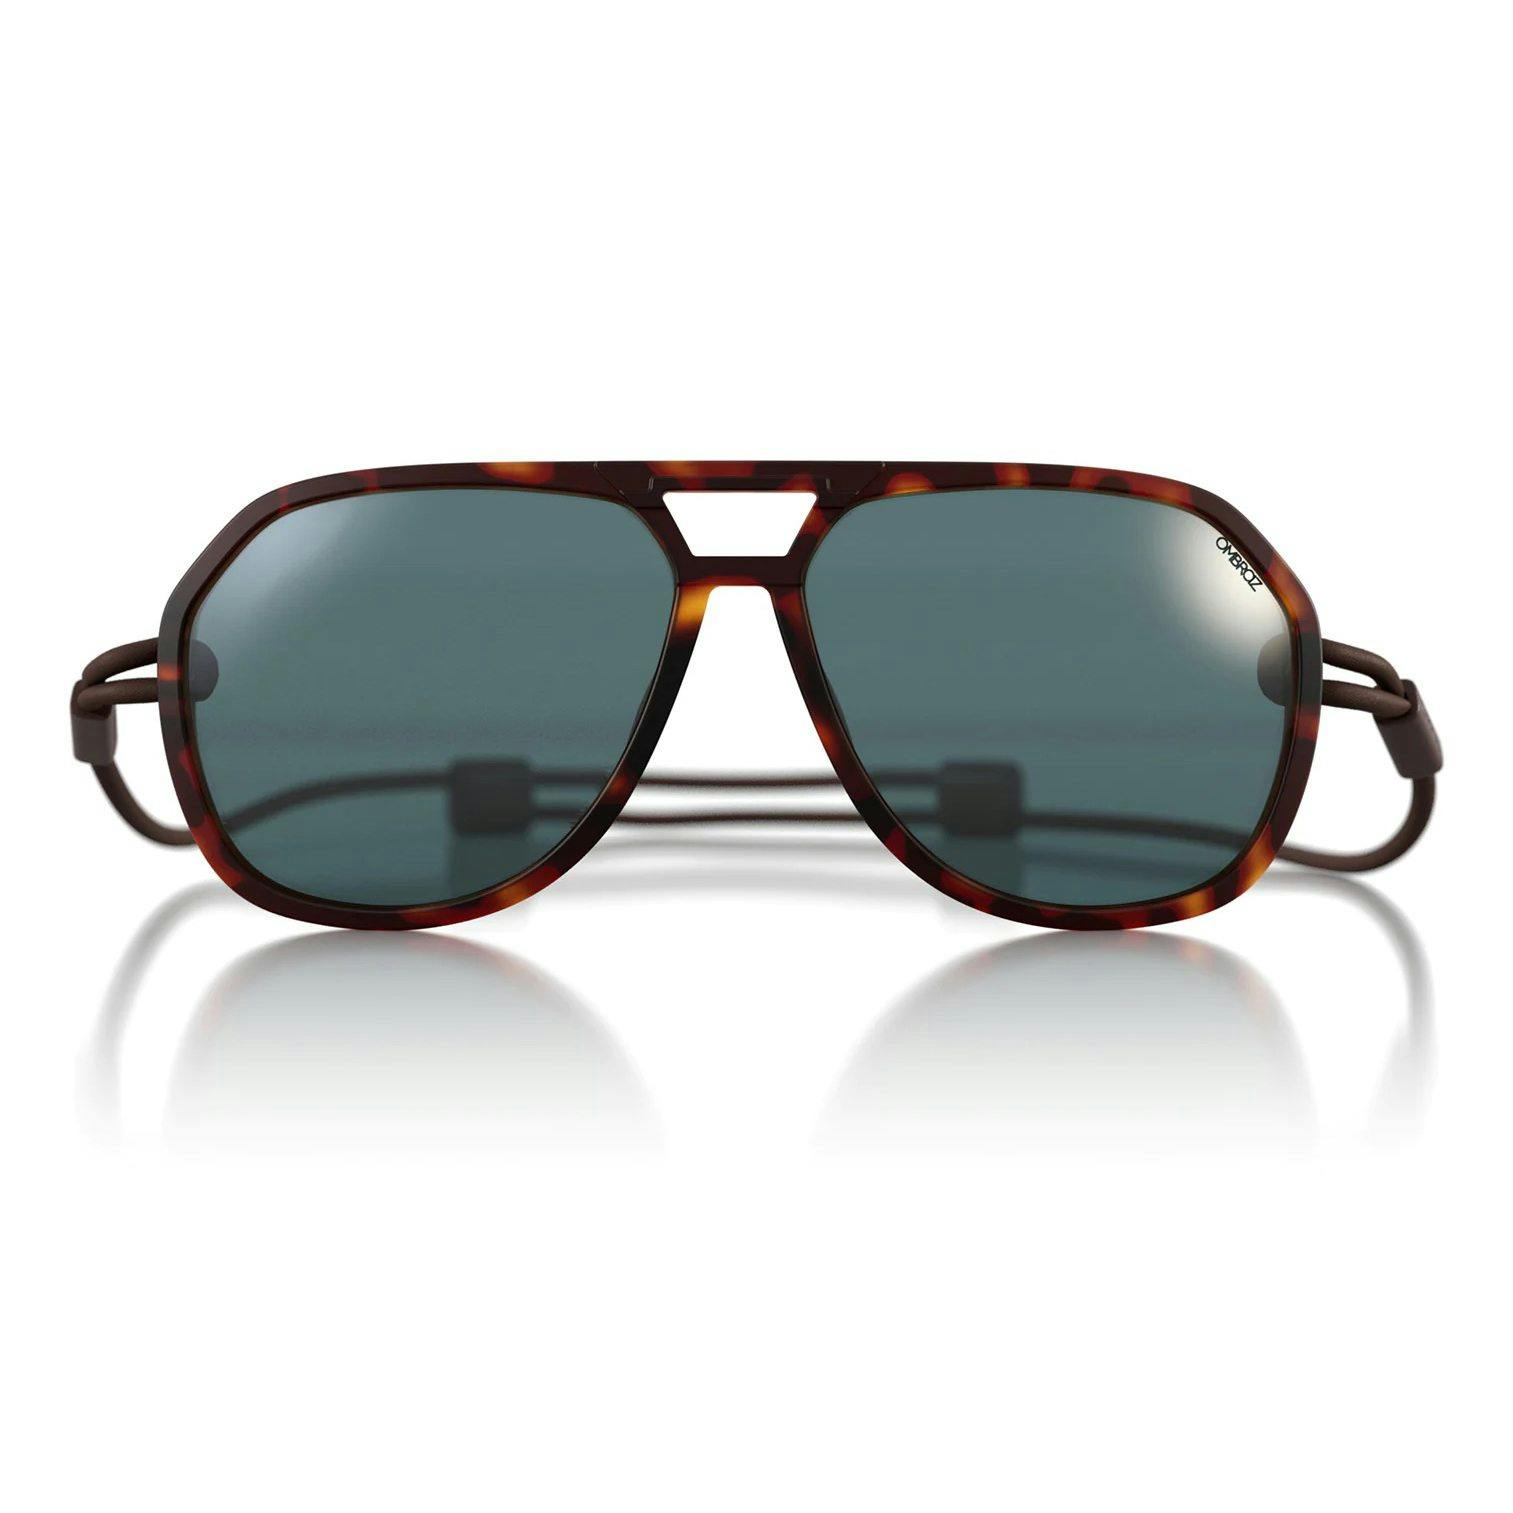 Ombraz Classic Armless Sunglasses - Tortoise/Polarized Grey ...